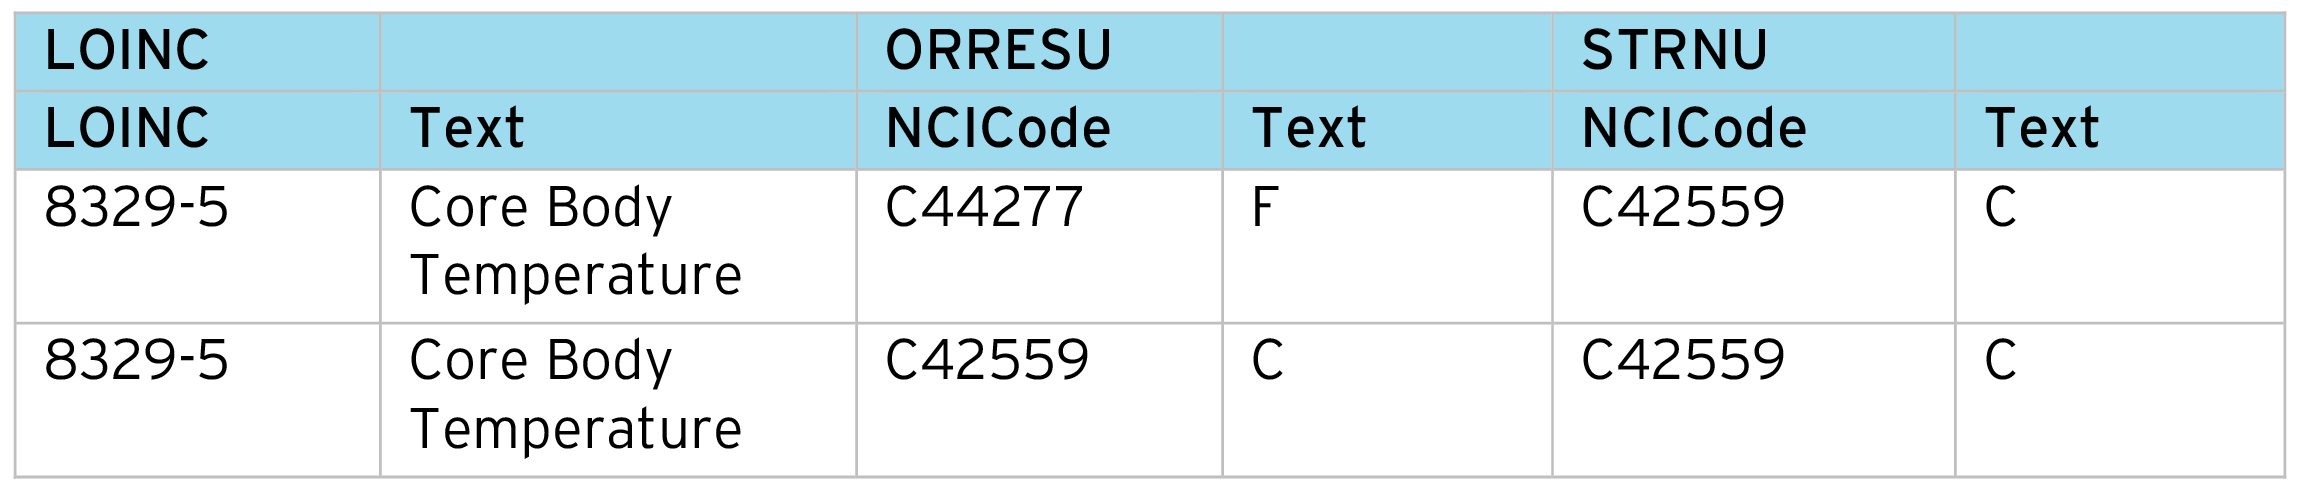 LOINC codes example 15